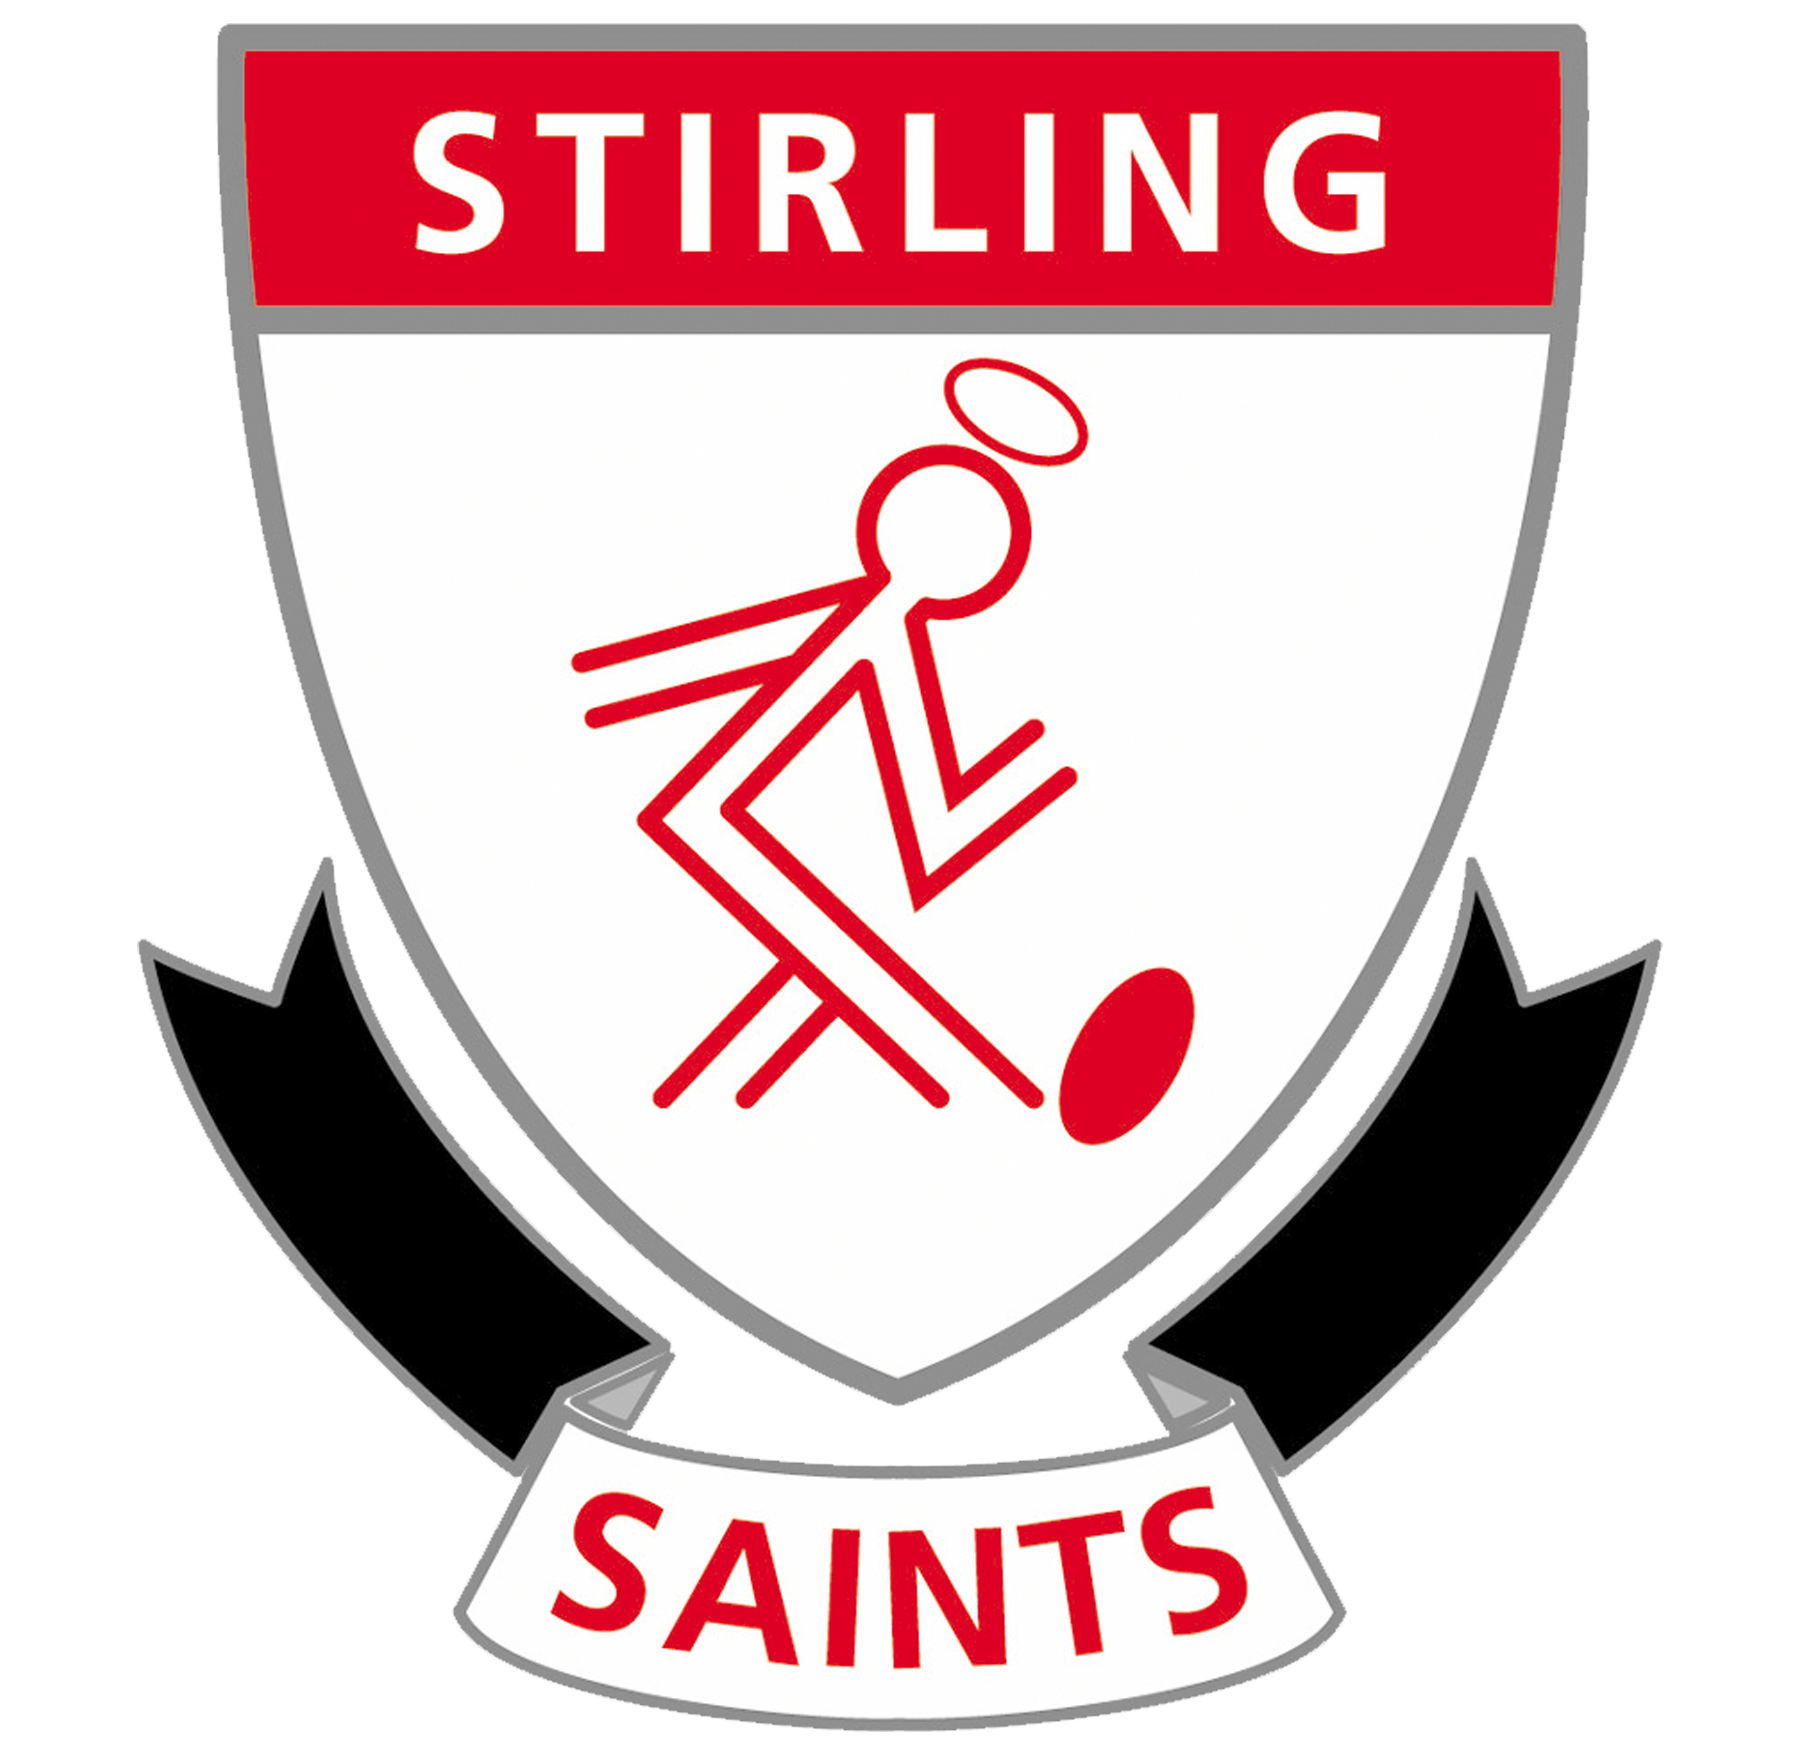 Stirling Saints Football Club